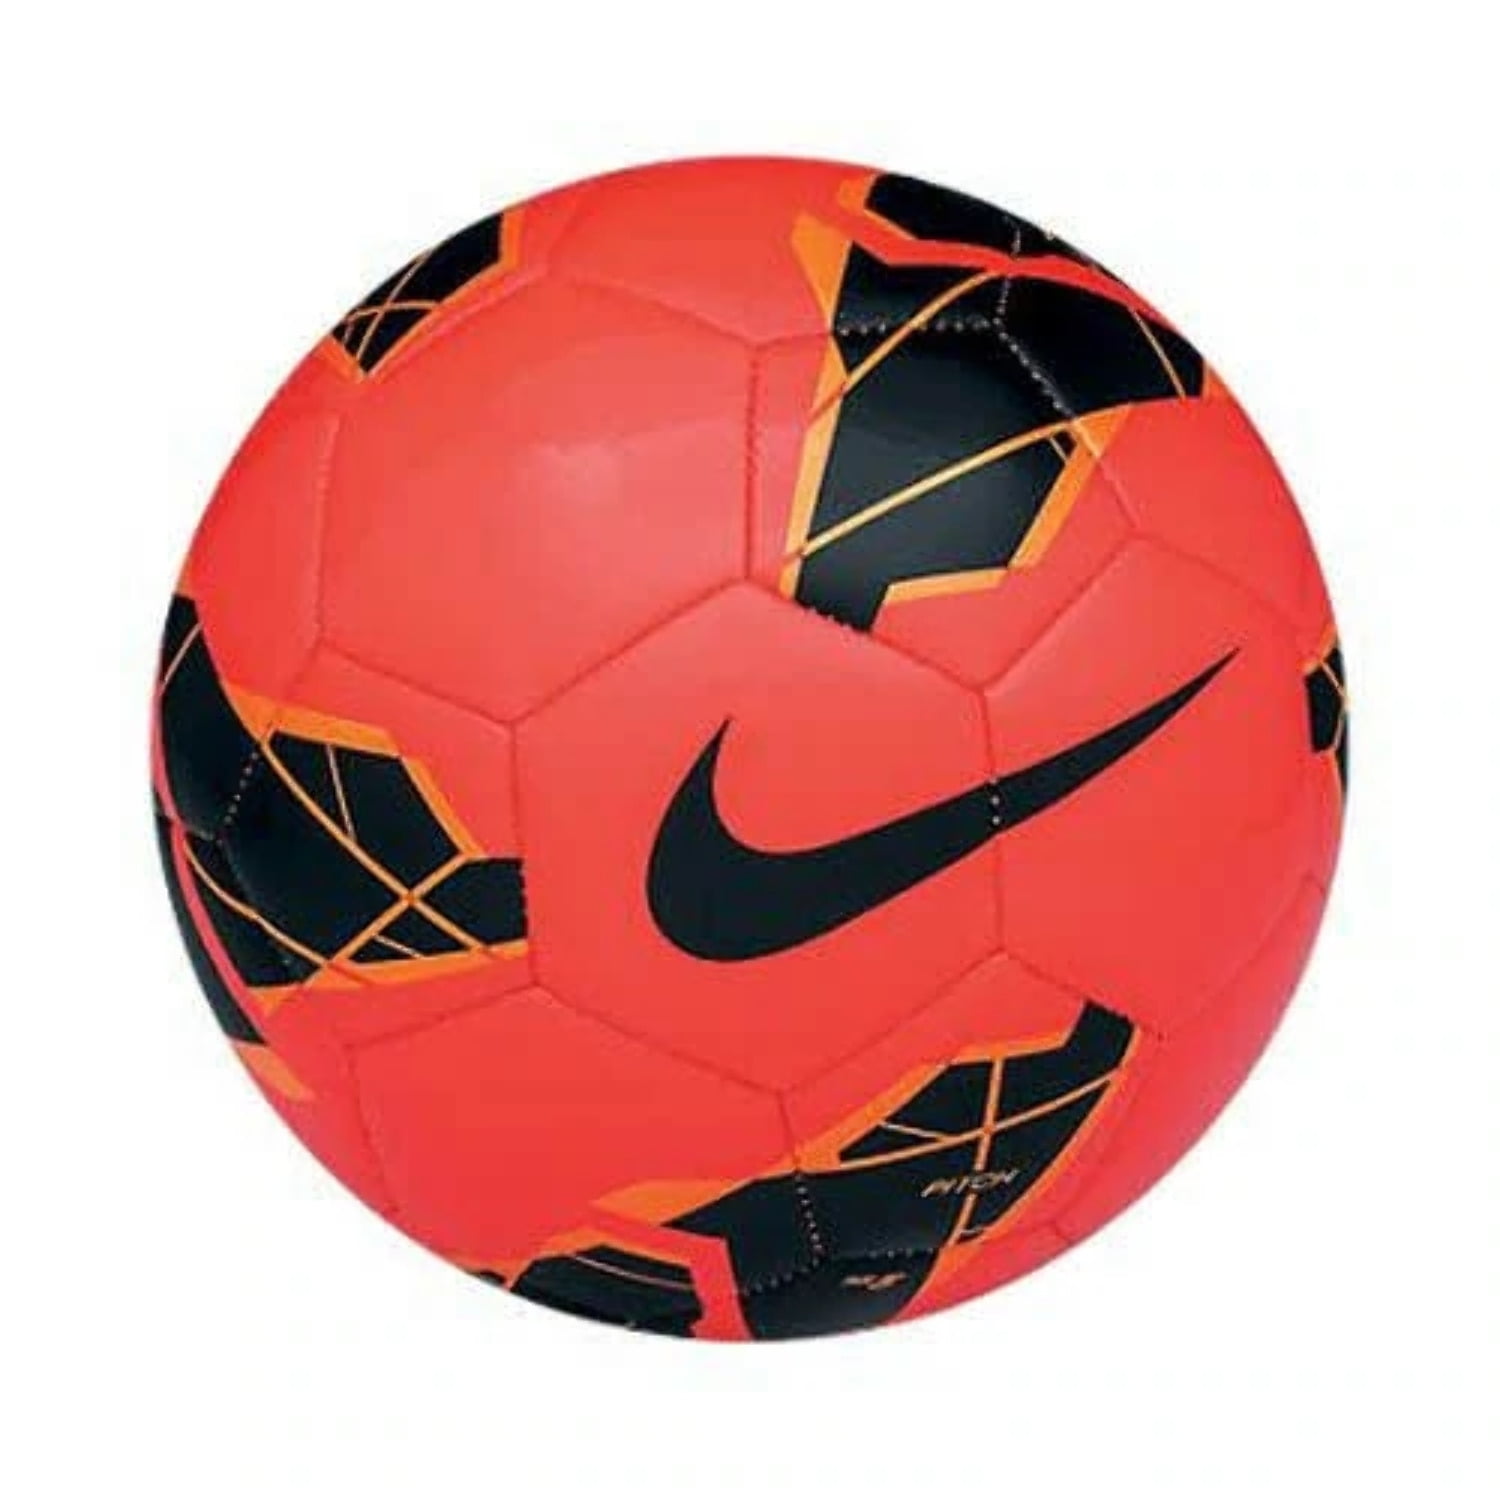 Mensajero Esplendor hacer los deberes Nike Pitch Soccer Ball 2013 - Red/Black/Orange 4 - Walmart.com